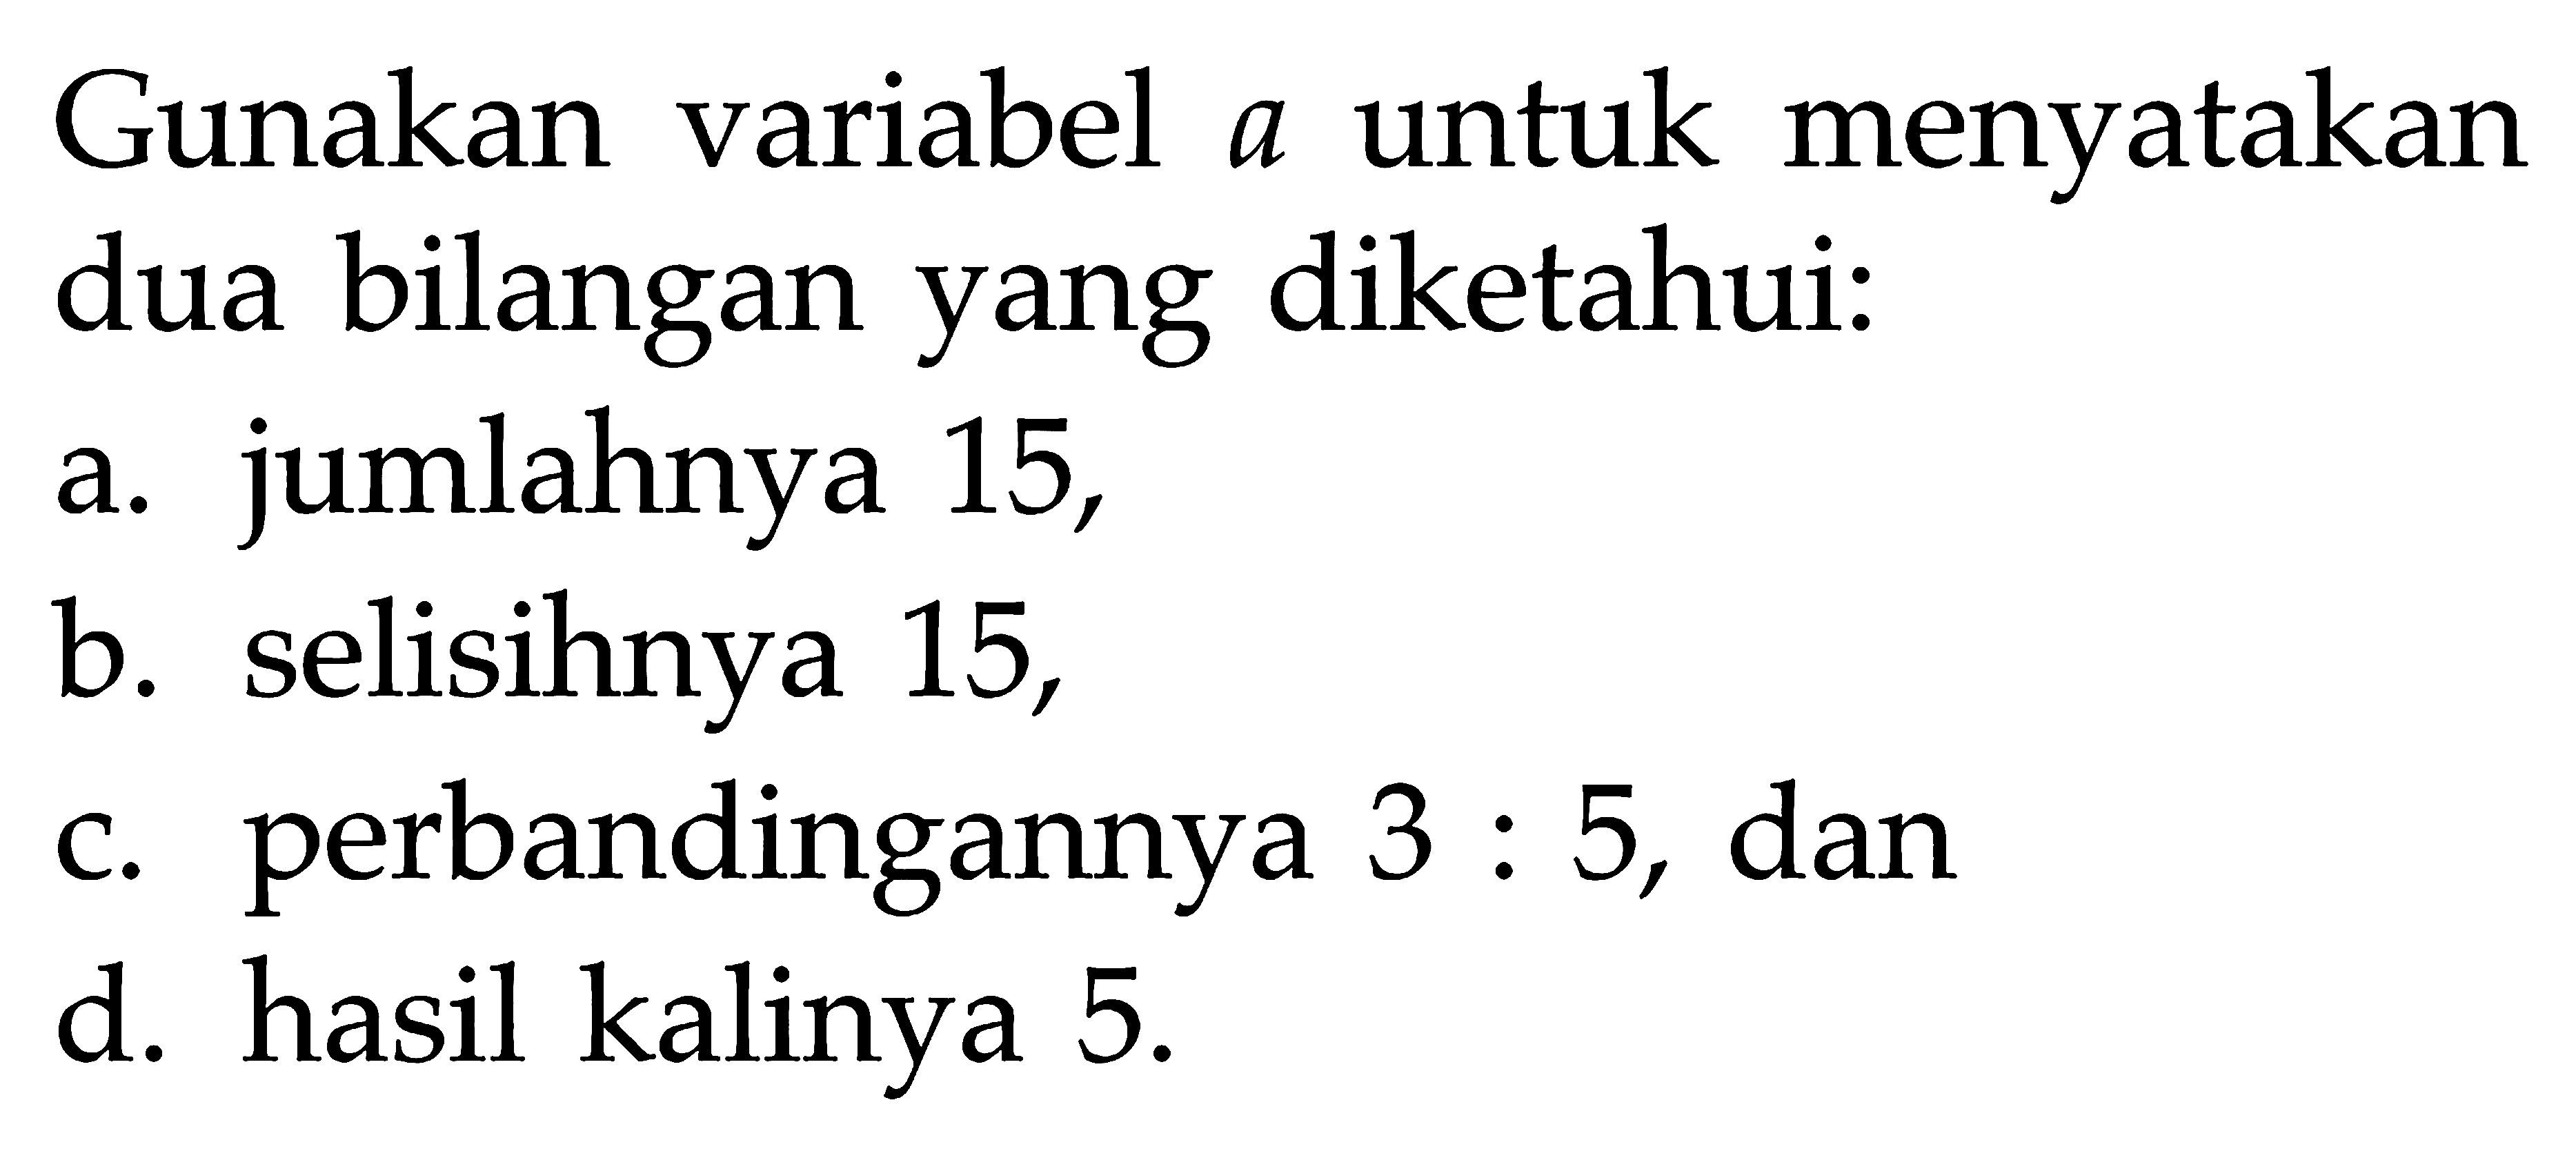 Gunakan variabel a untuk menyatakan dua bilangan yang diketahui:
a. jumlahnya 15,
b. selisihnya 15,
c. perbandingannya 3:5, dan
d. hasil kalinya 5.